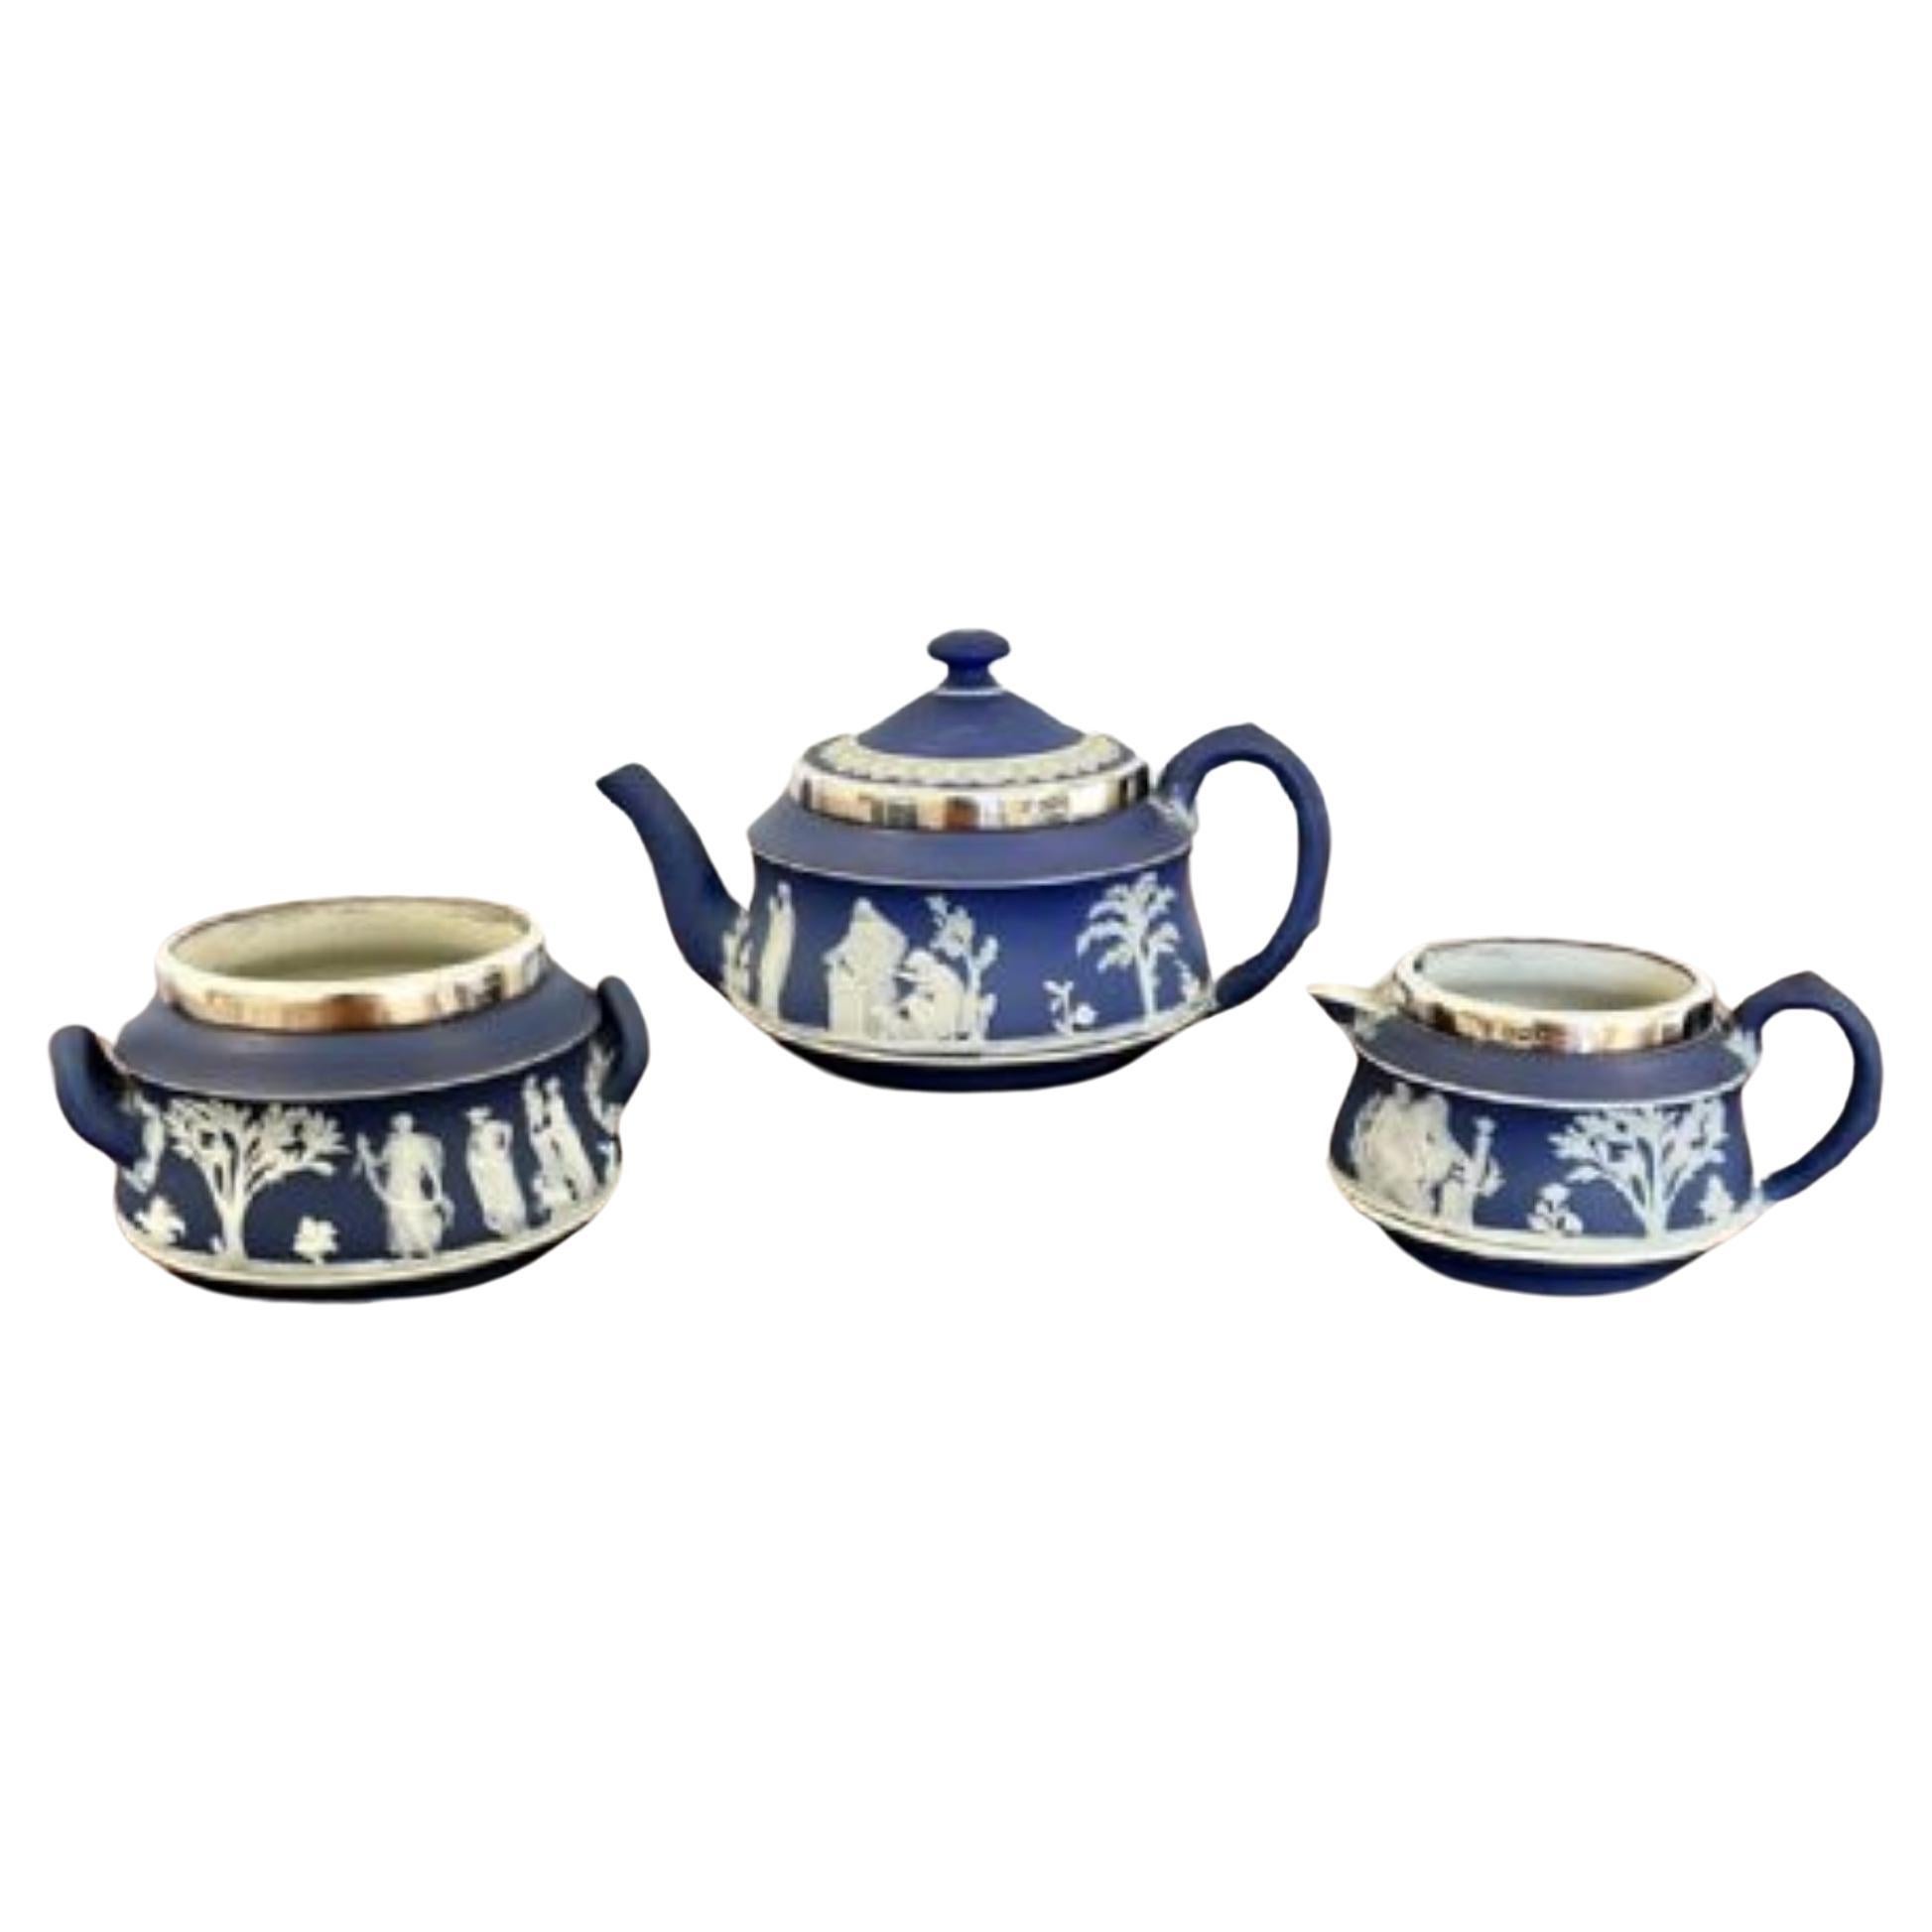 Qualität antiken viktorianischen Silber montiert drei Stück Jasperware Wedgwood Tee-Set